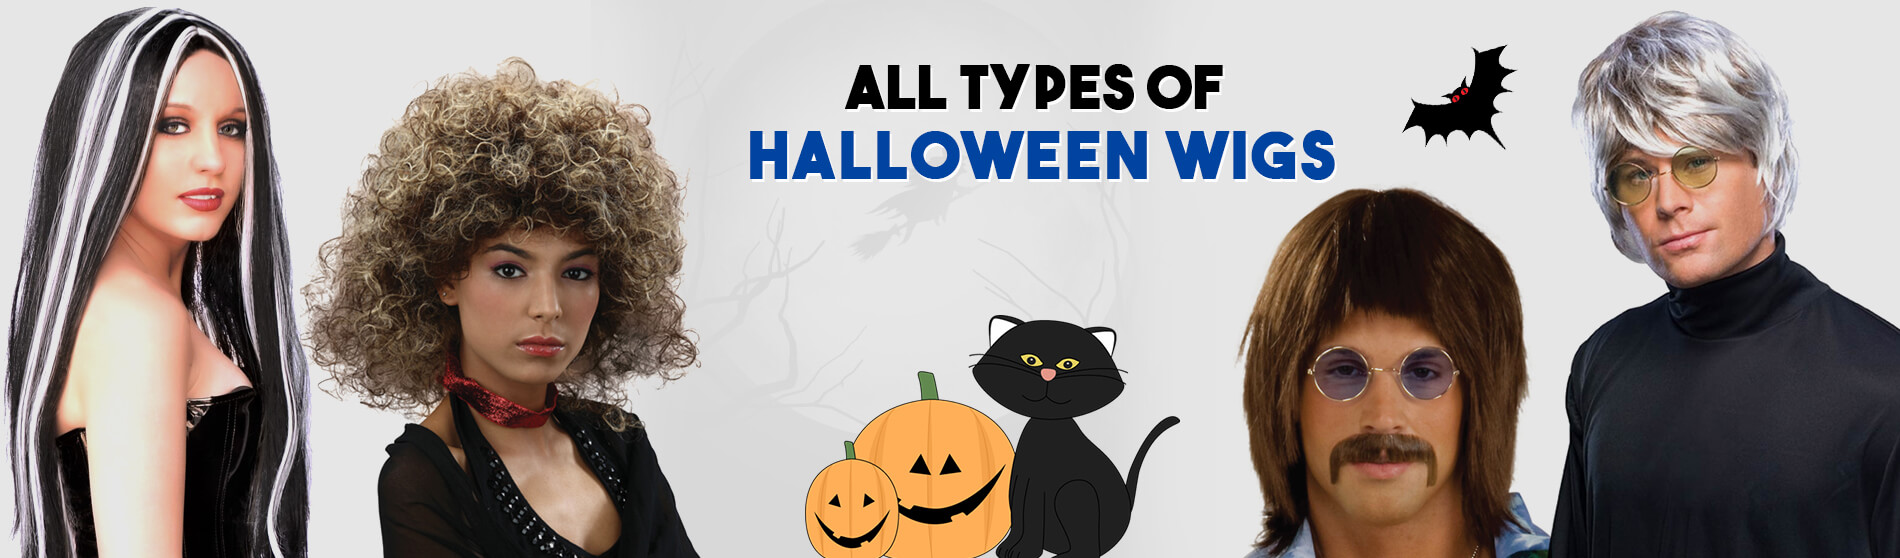 Glendale Halloween : All Types Of Halloween Wigs